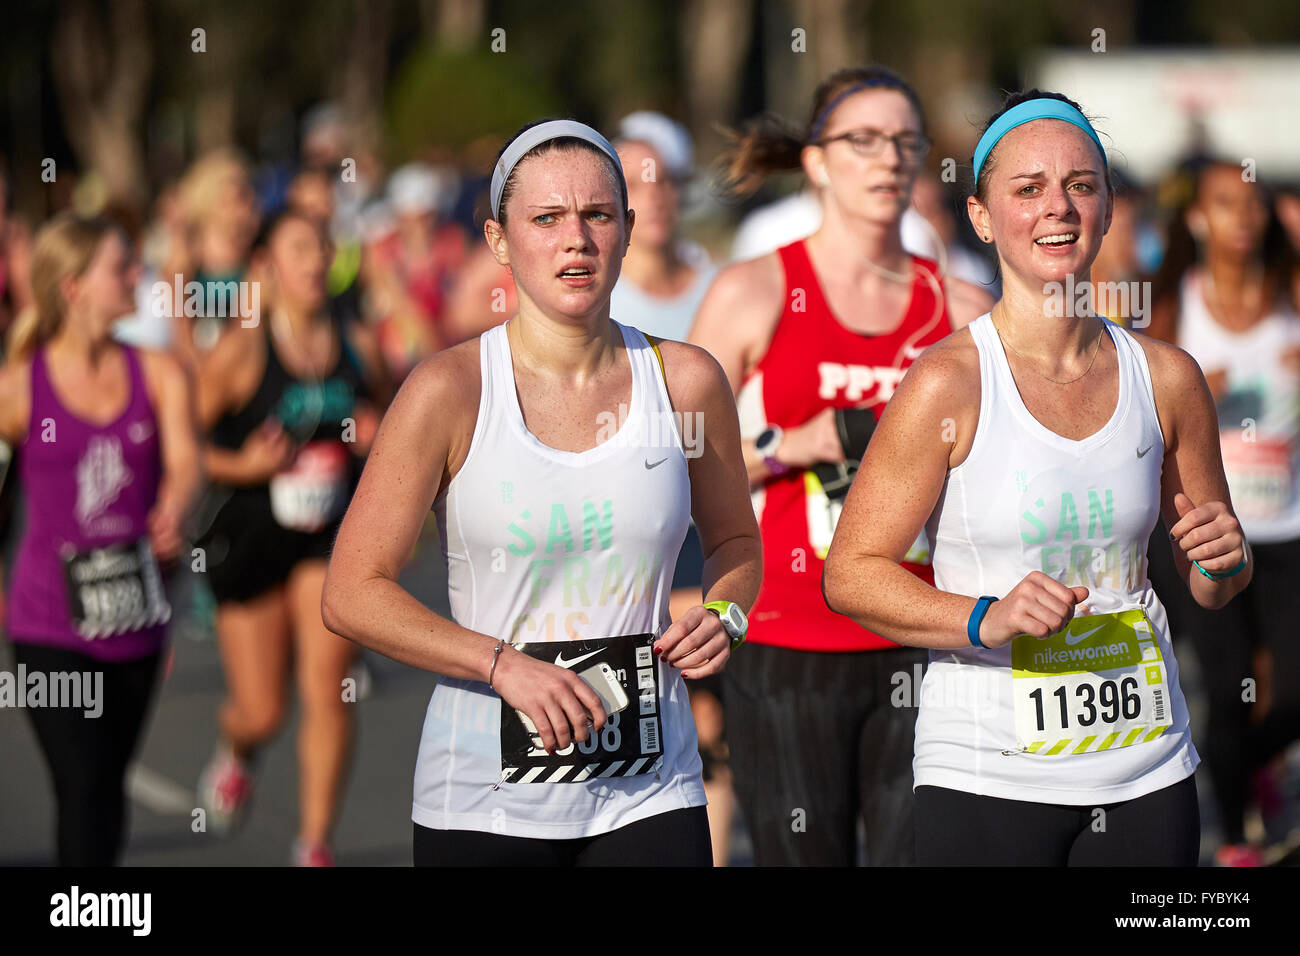 Female Athletes Running In The Nike Woman's Half Marathon, San Francisco, 2015. Stock Photo